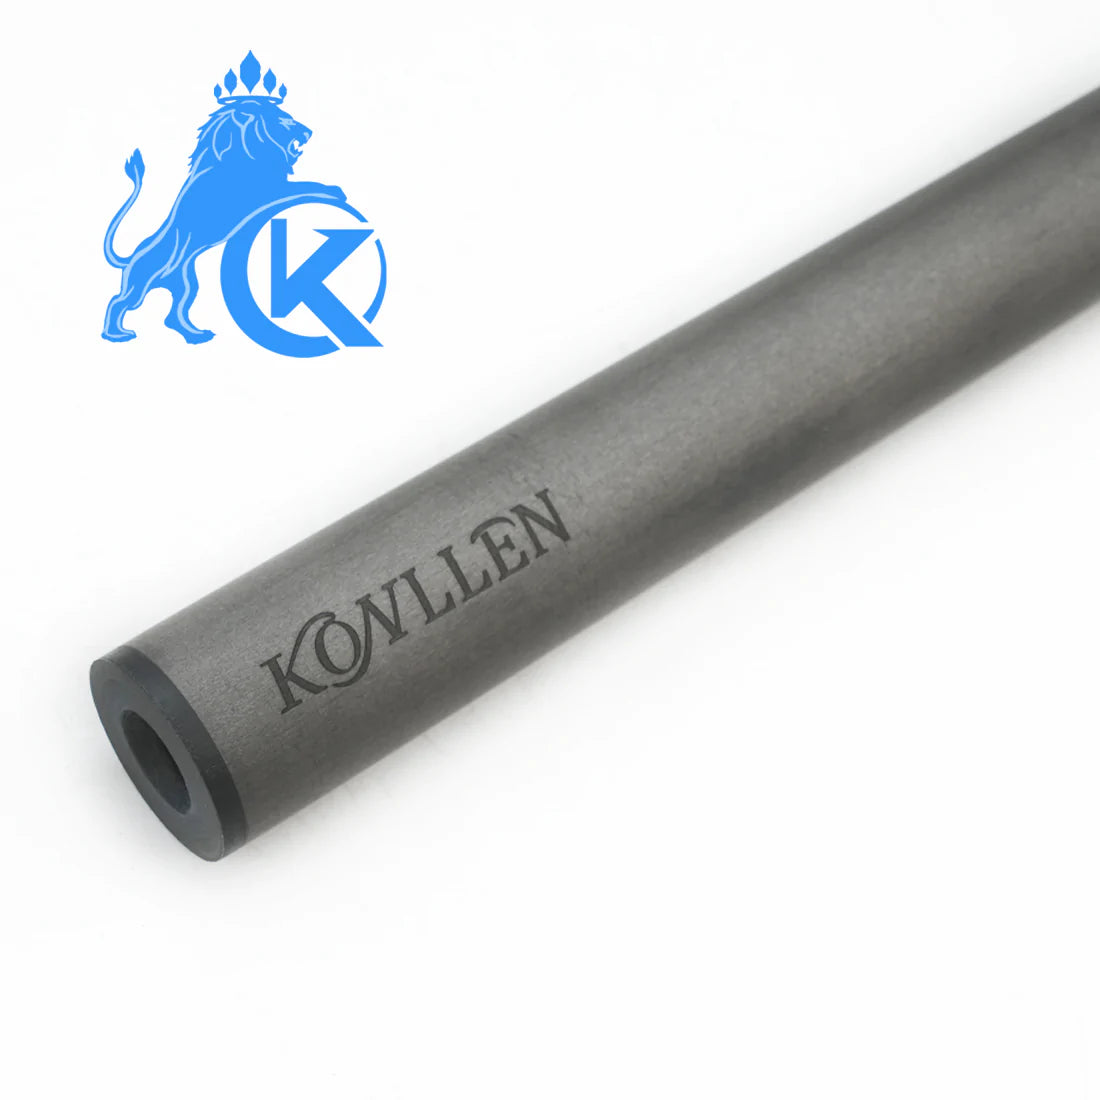 KONLLEN Carbon Fiber Shaft 11.75mm/12.75mm Tip 3/8*8 Radial Pin Joint Technology Low Deflection Billiard Cue Stick Shaft